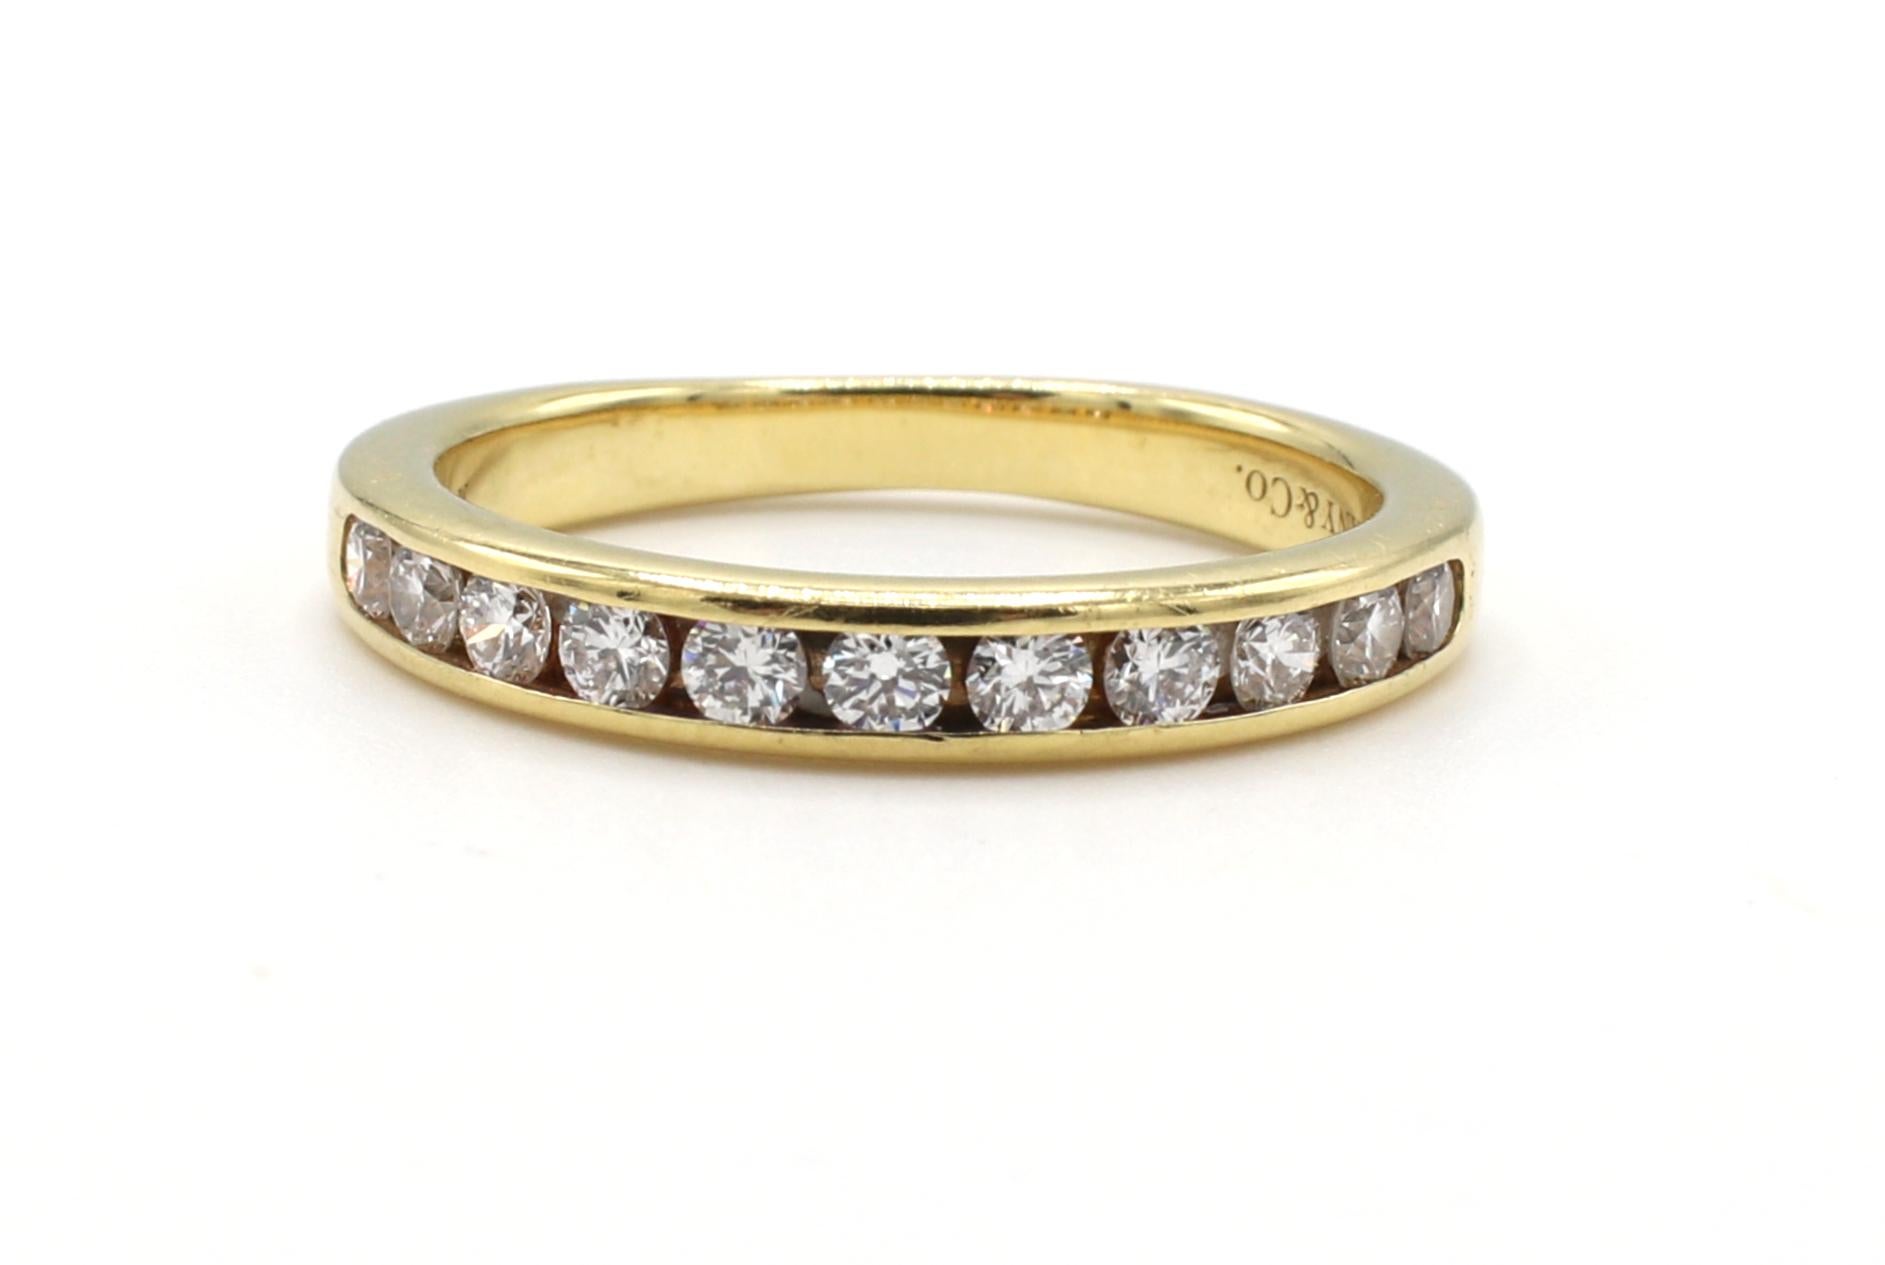 Tiffany & Co. 18 Karat Yellow Gold .33 Carat Channel Set Diamond Wedding Band Ring 
Metal: 18k yellow gold
Weight: 3.1 grams
Diamonds: .33 CTW D-G IF-VS2
Size: 5.5 (US) 
Width: 3mm
Signed: Tiffany & Co. AU750